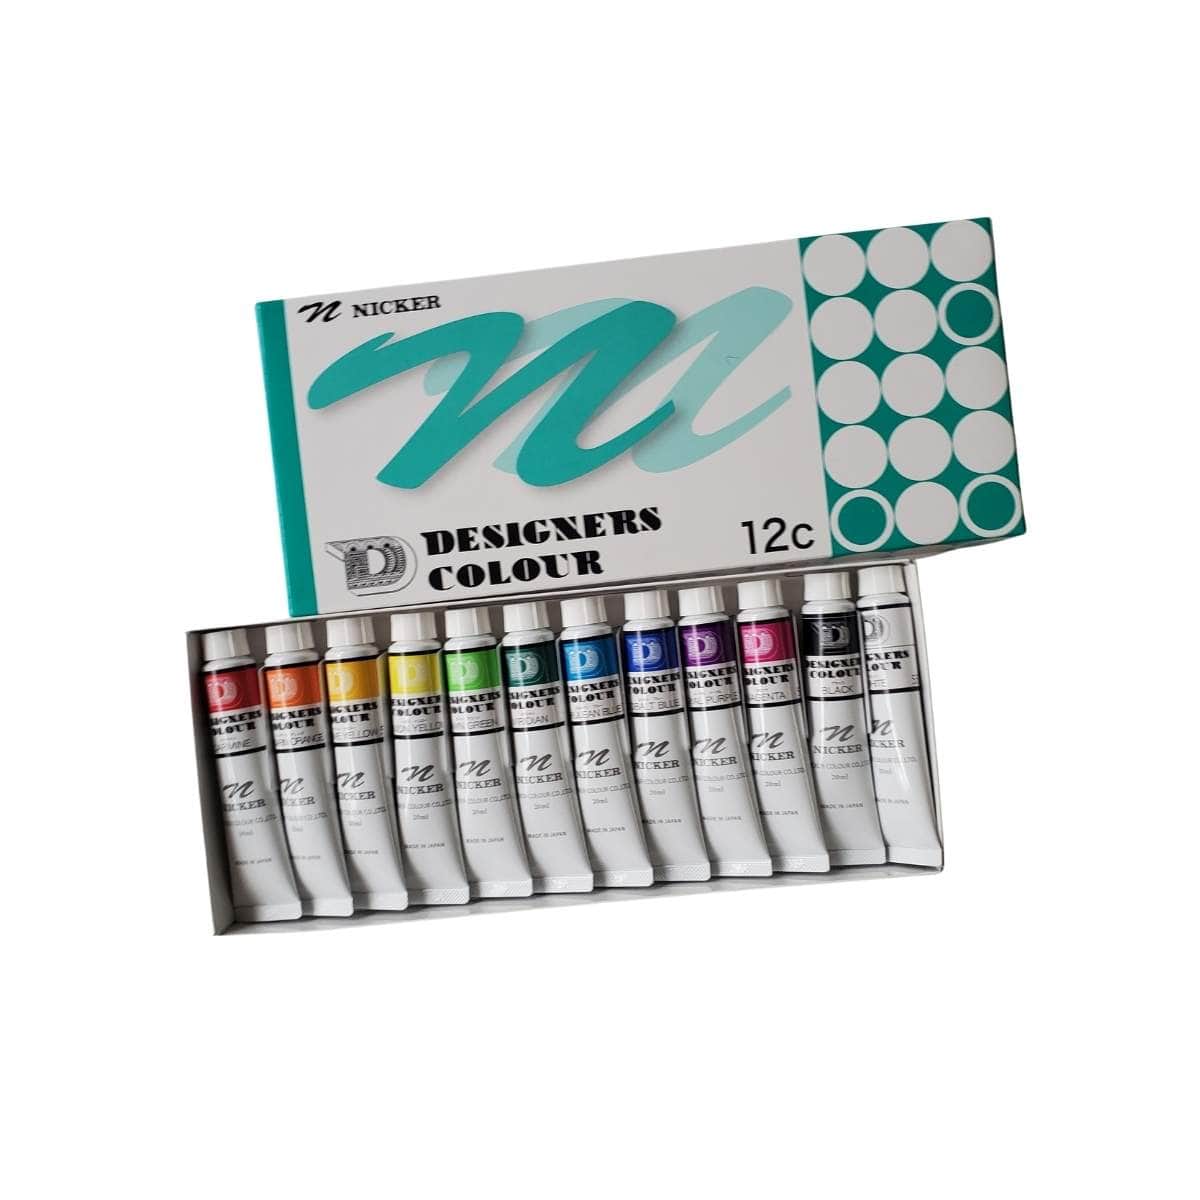 Nicker Poster Colour Paint Sets- 40ml Jars — Art Department LLC